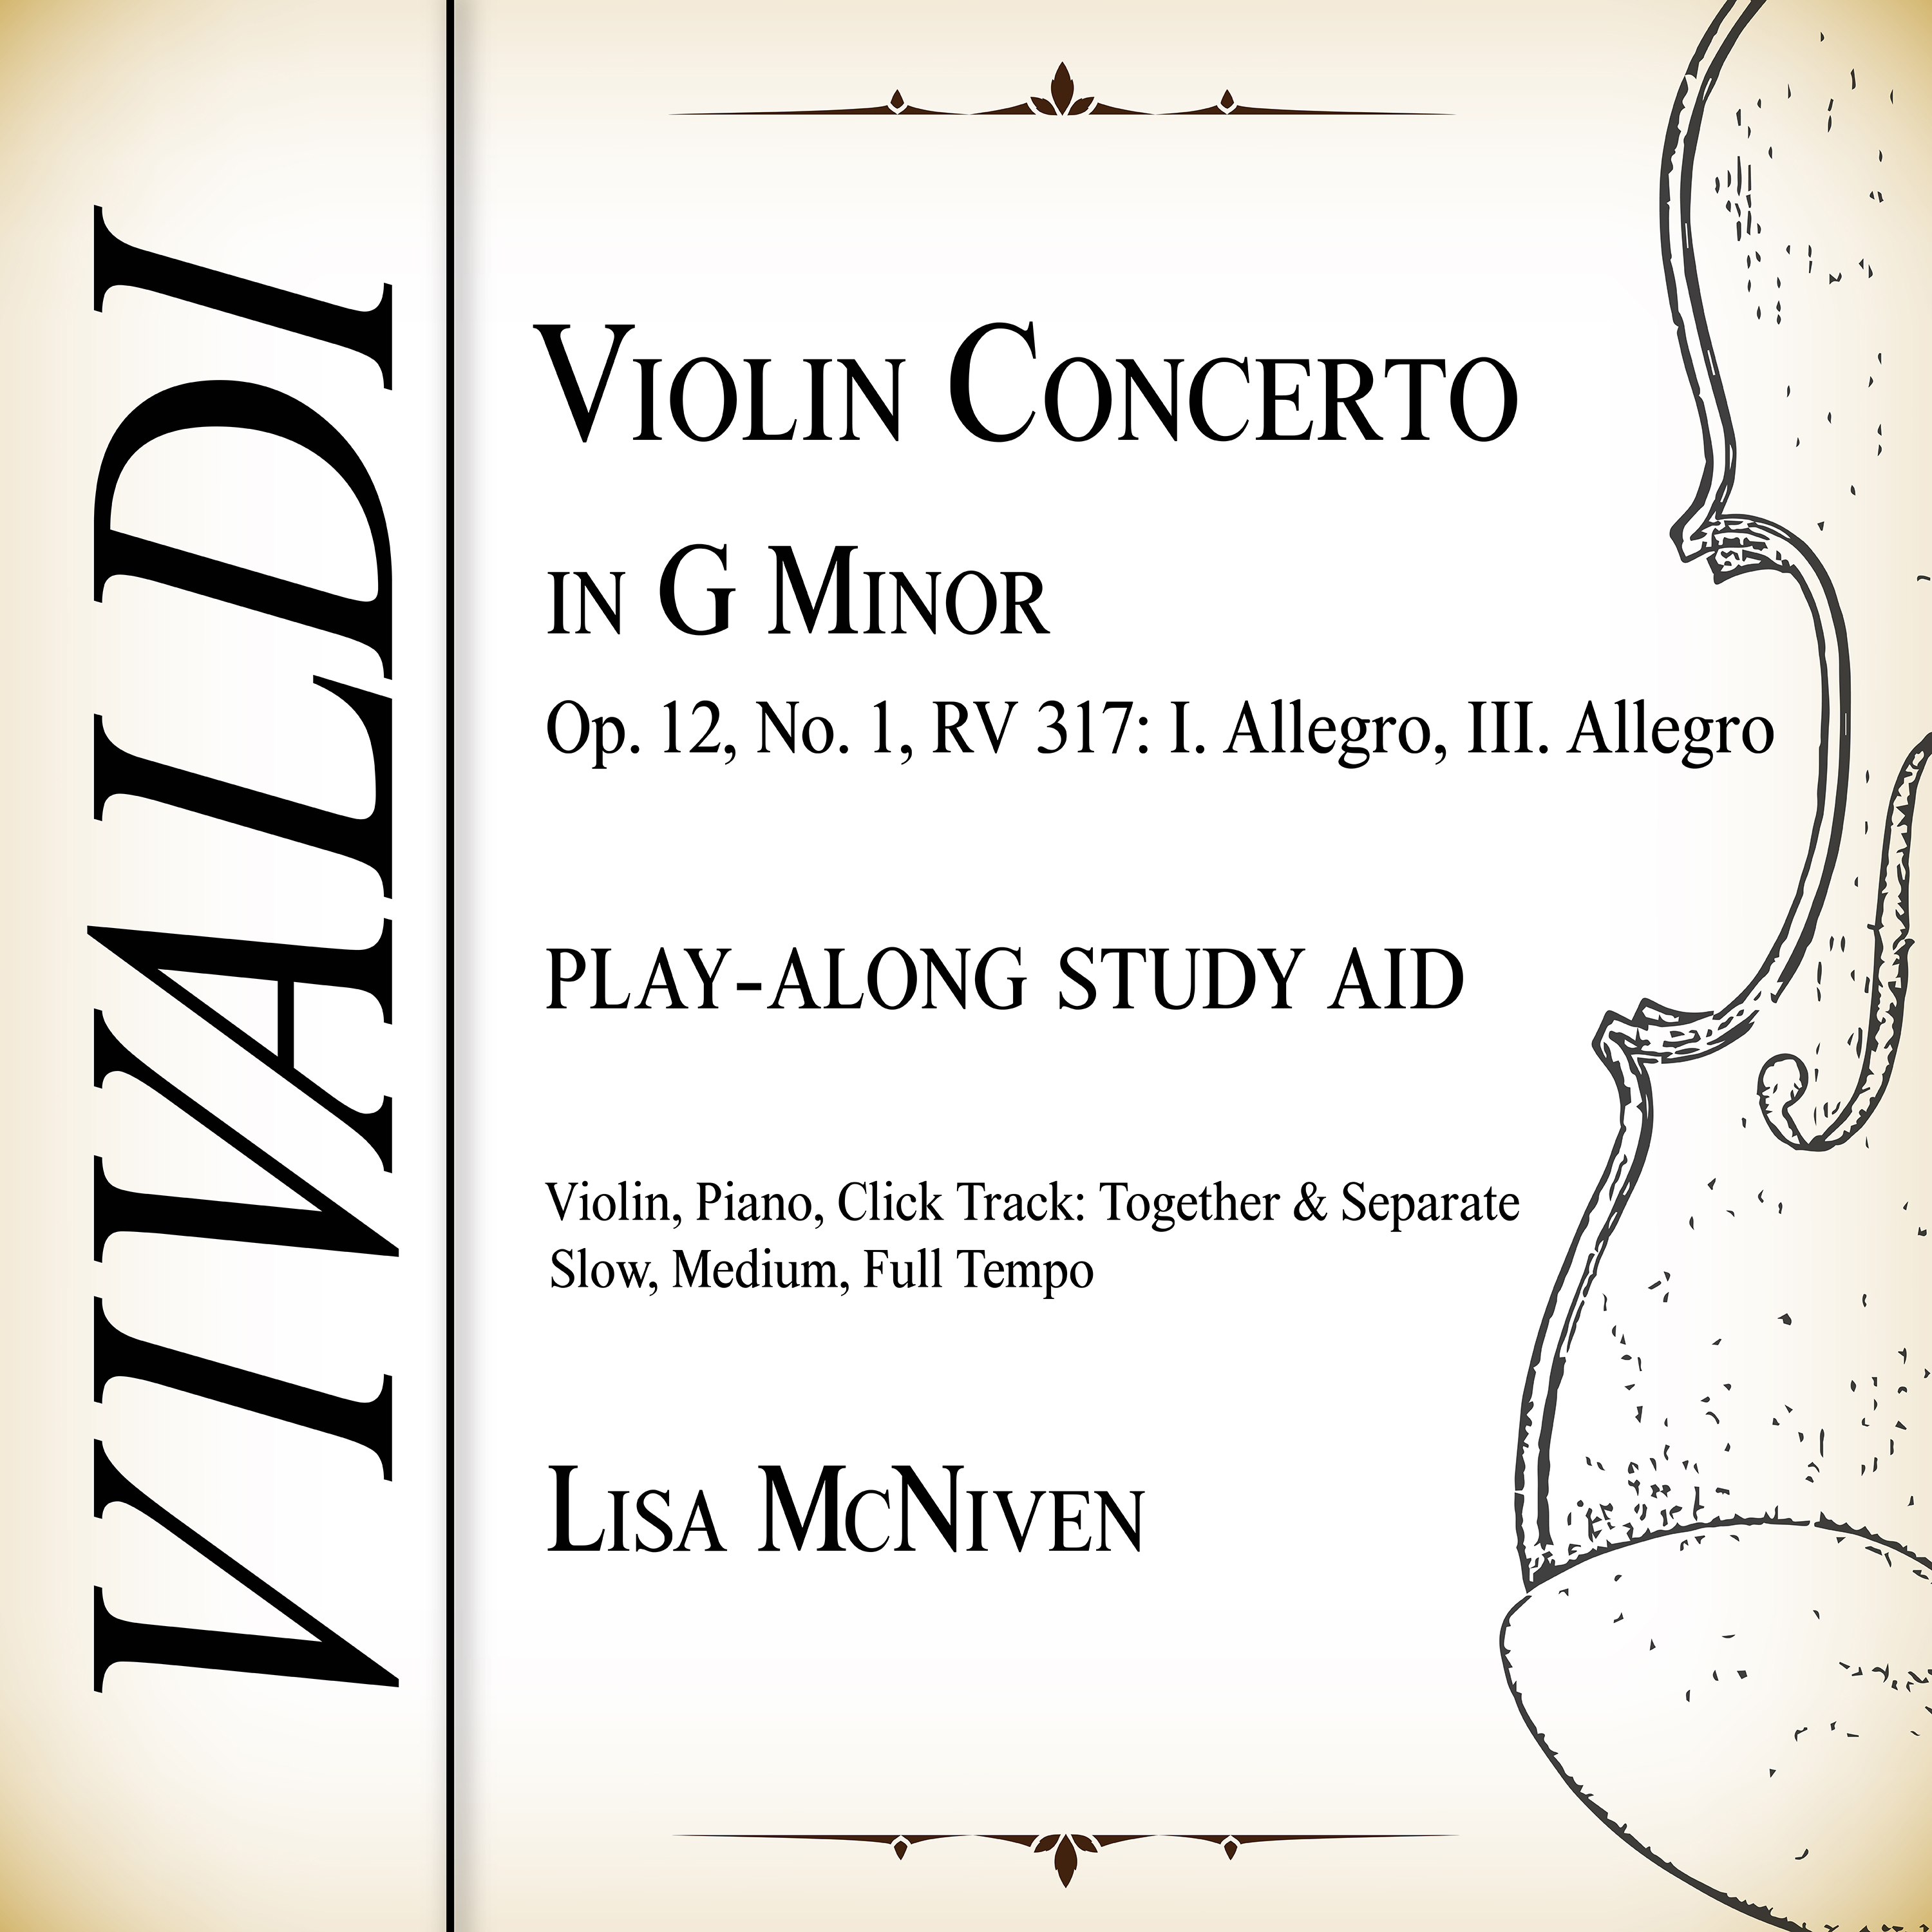 Violin Concerto in Minor Play-Along Aid - M4A - LisaMcNiven.com